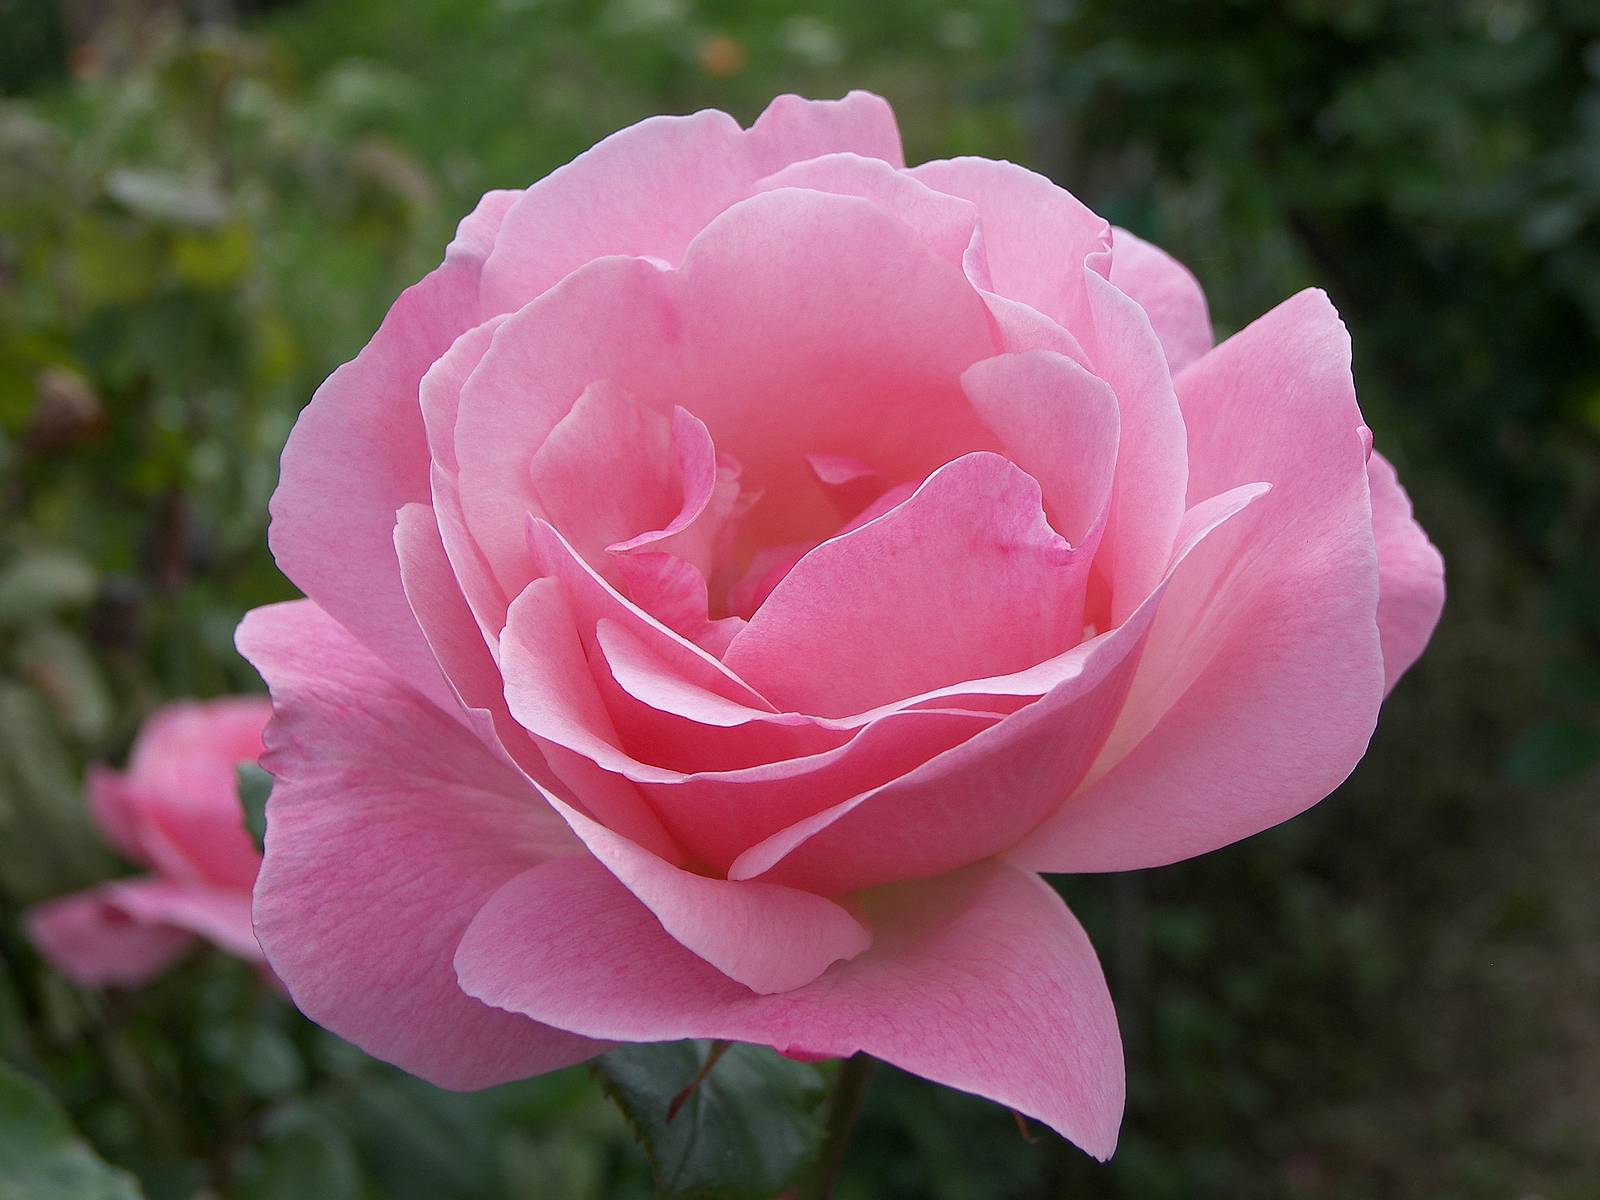 rose bloom blooming flower - rose mix